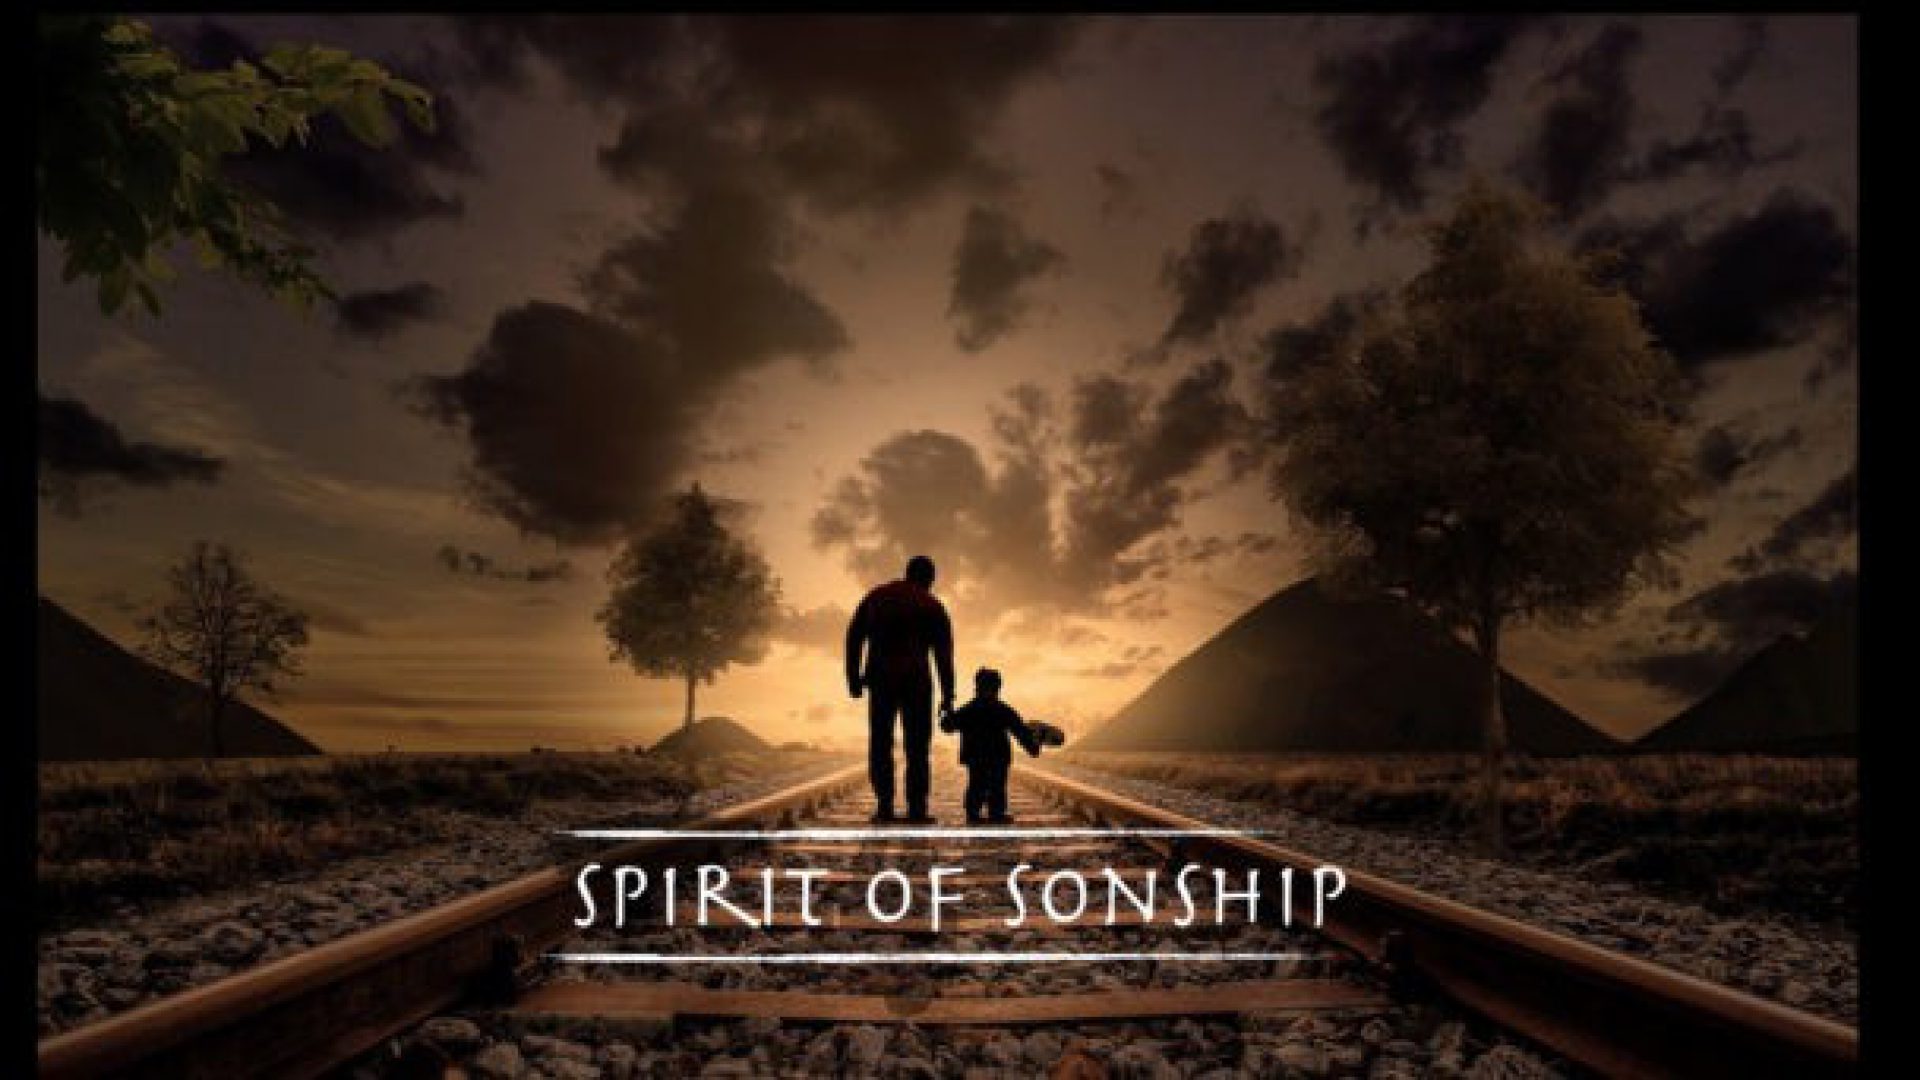 A SPIRIT OF SONSHIP